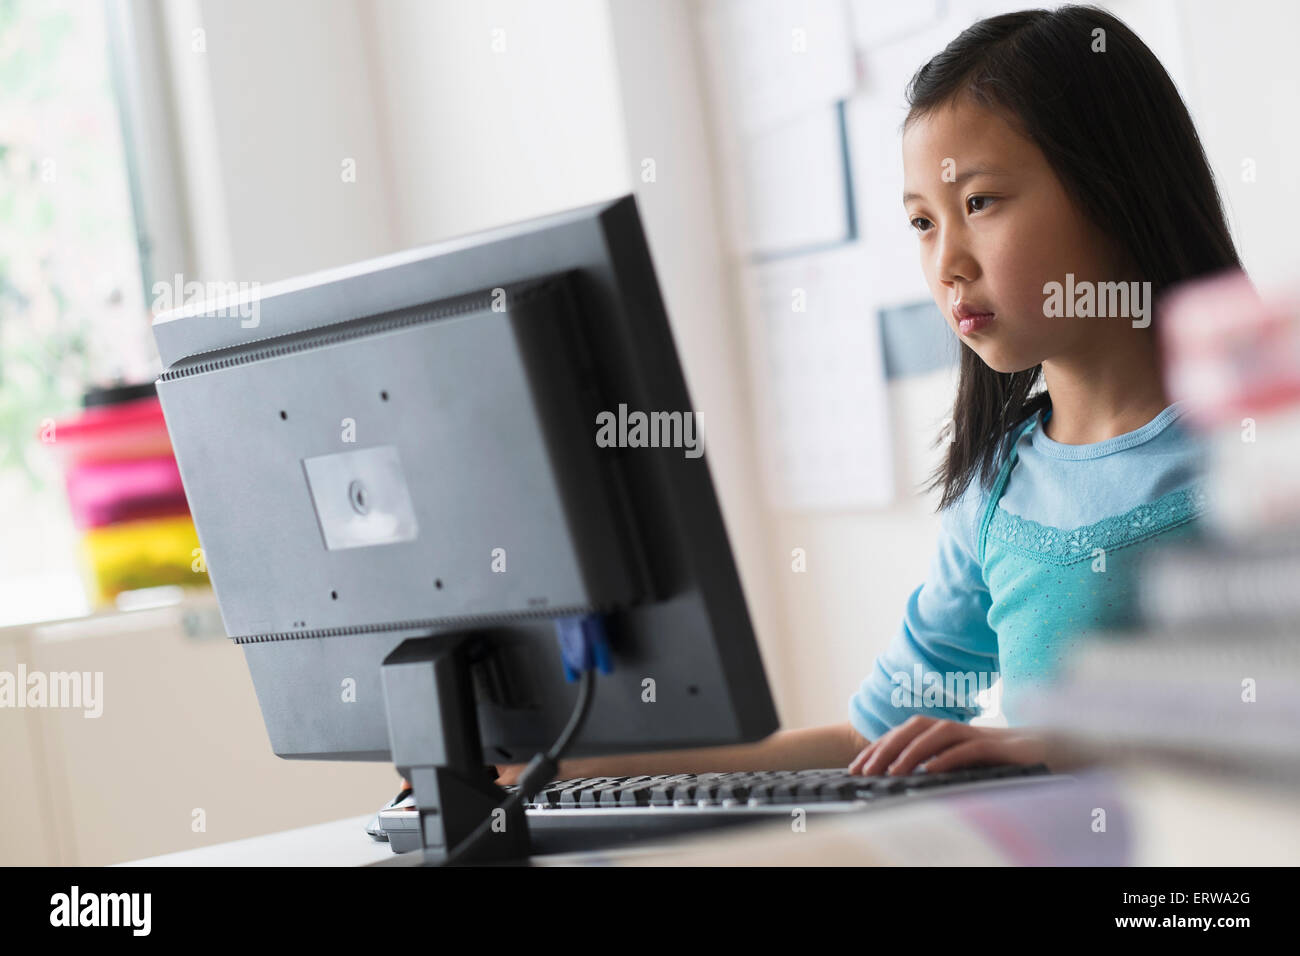 Chinese student using desktop computer Stock Photo